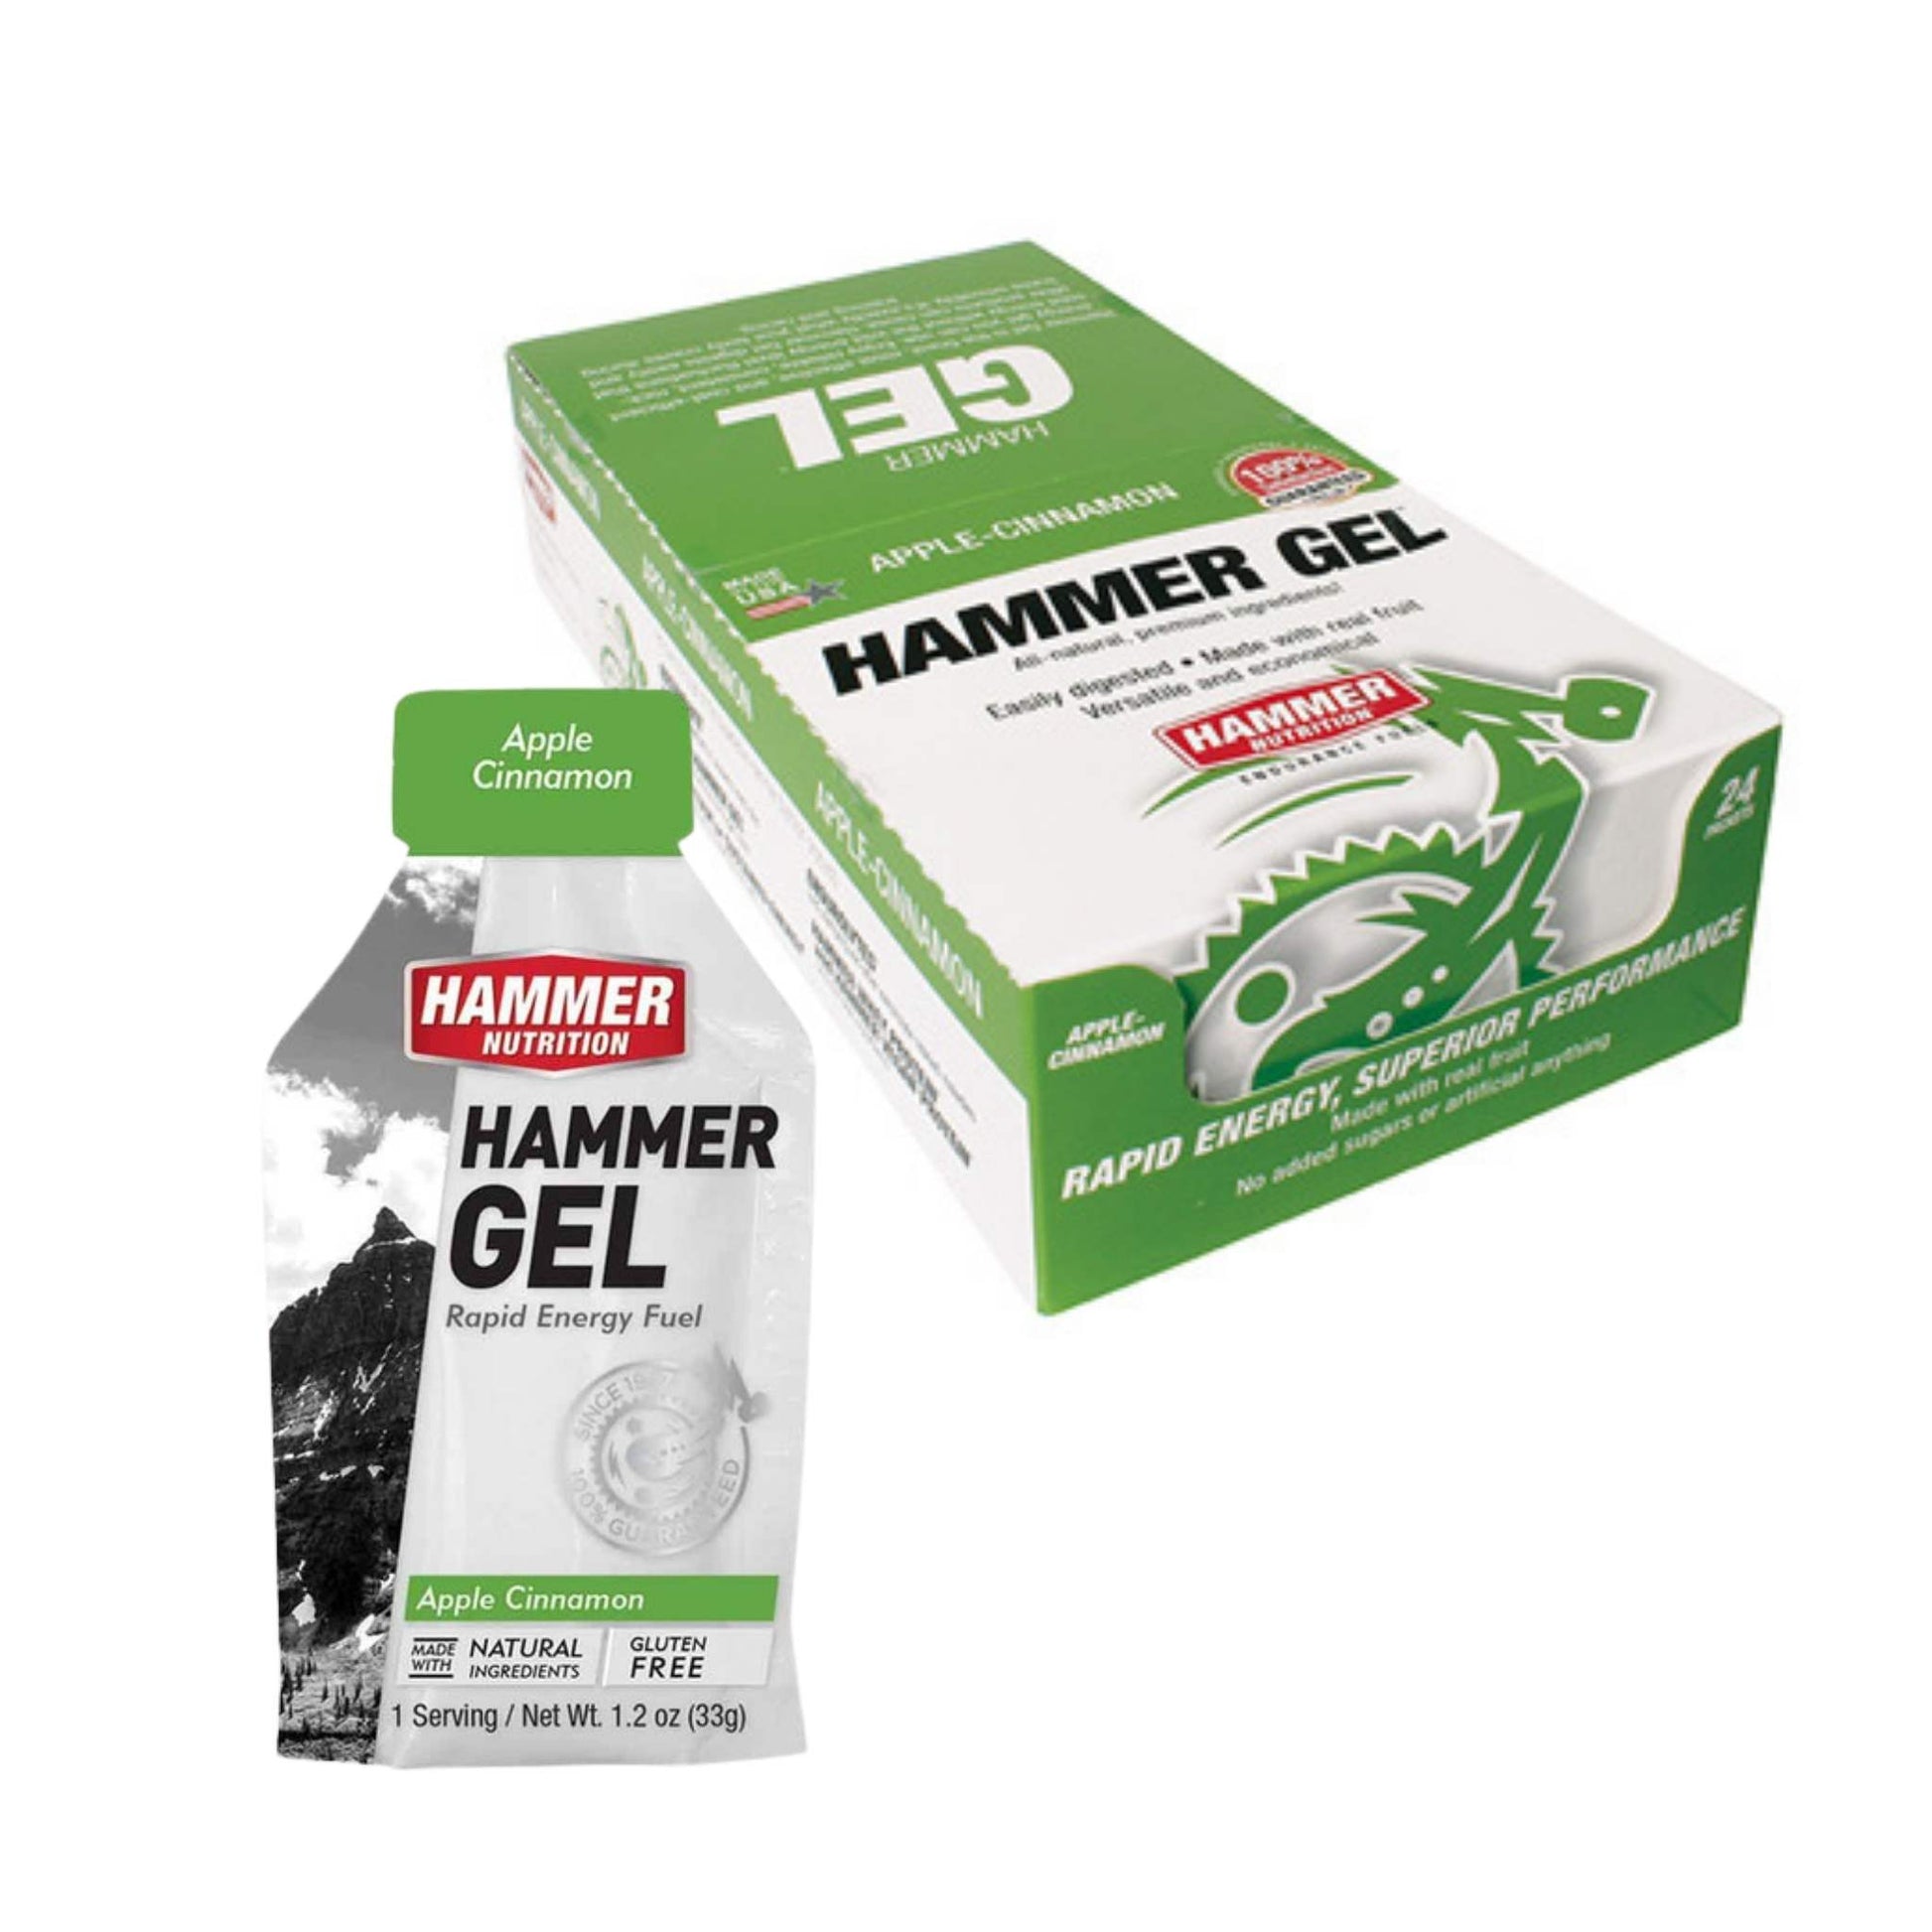 Hammer Nutrition Endurance Gel, Box of 24, Apple Cinnamon, Team Perfect